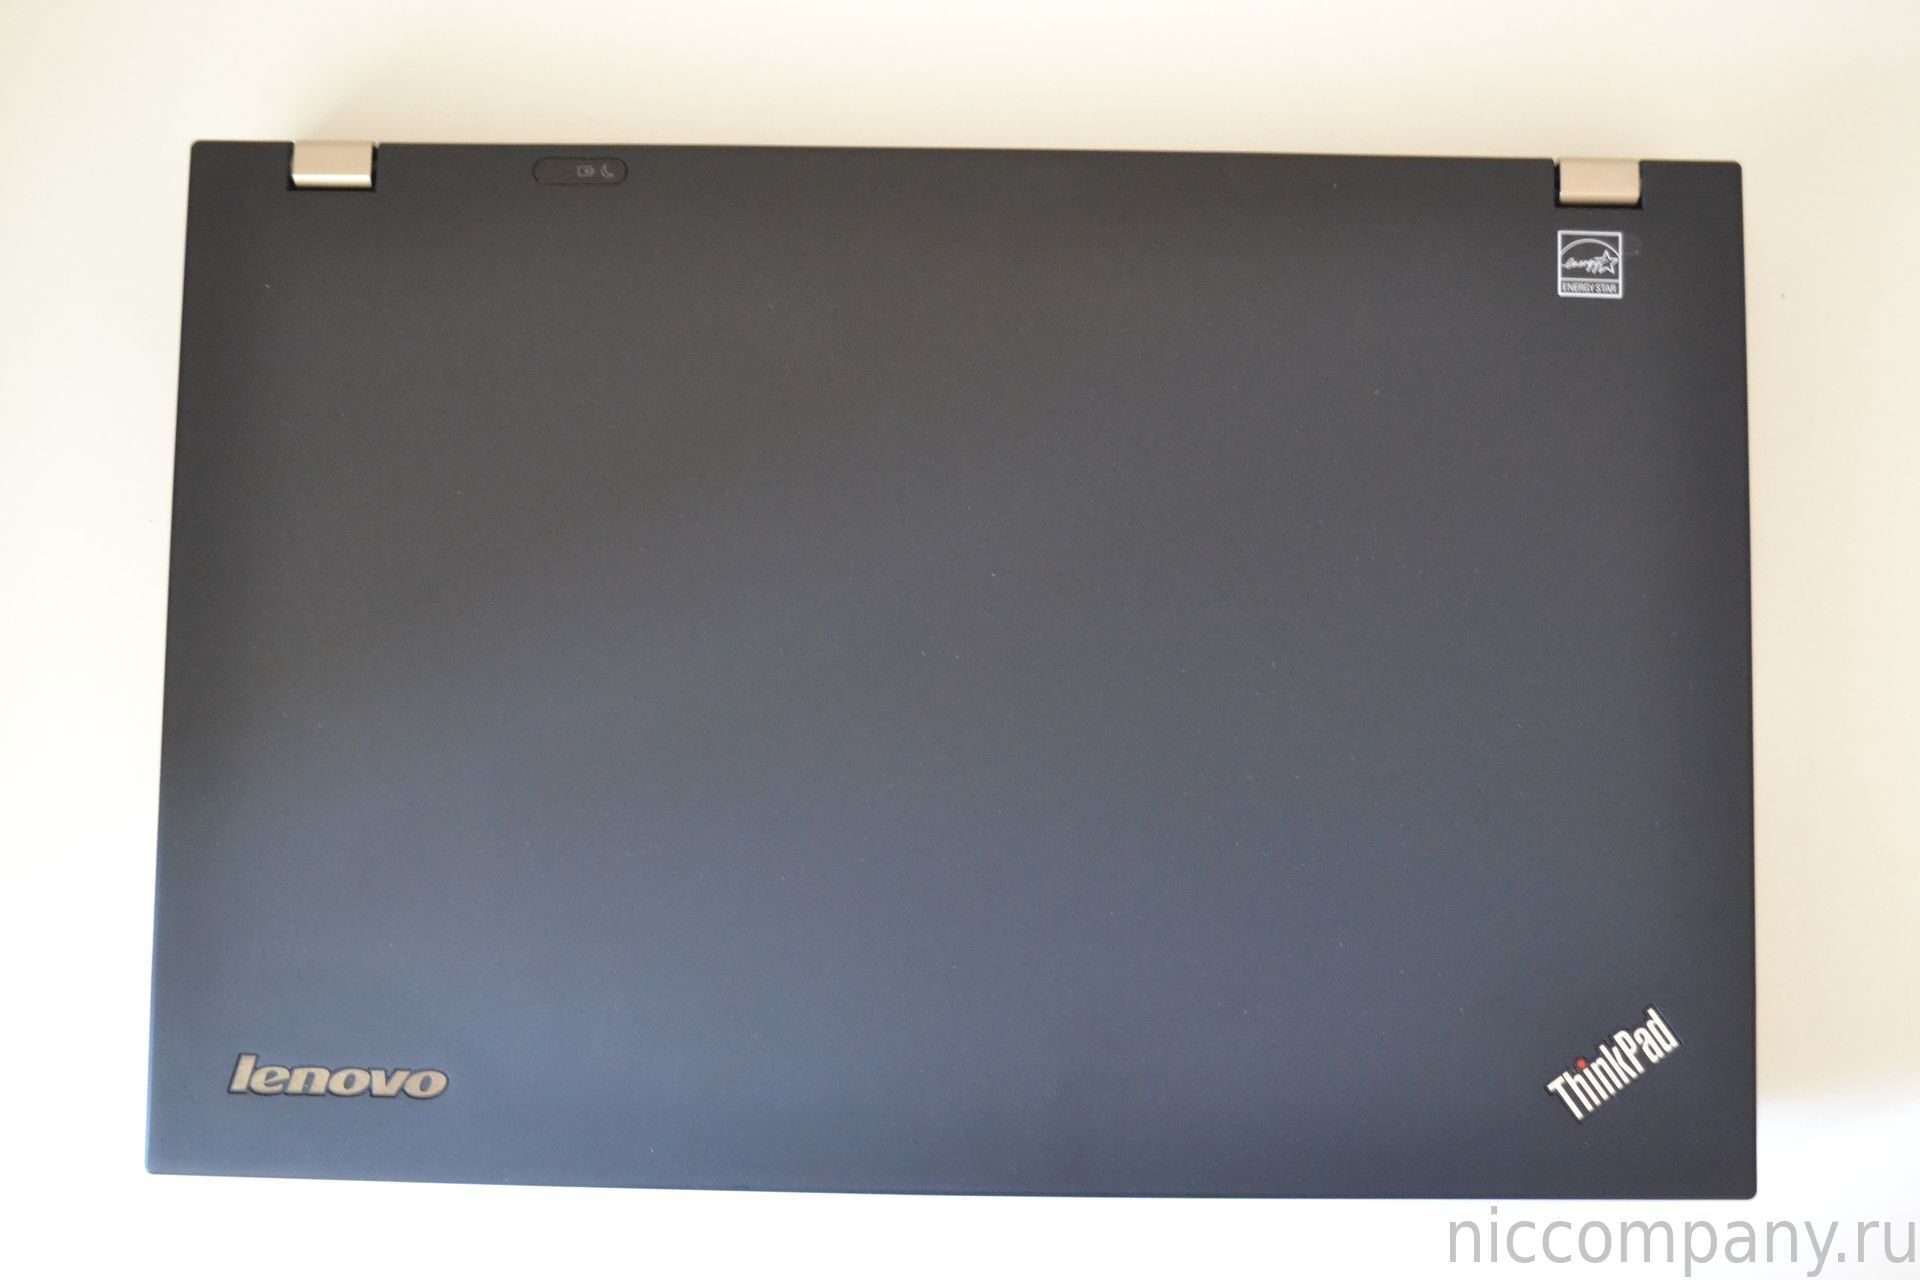 Ноутбук Леново Thinkpad W530 Цена